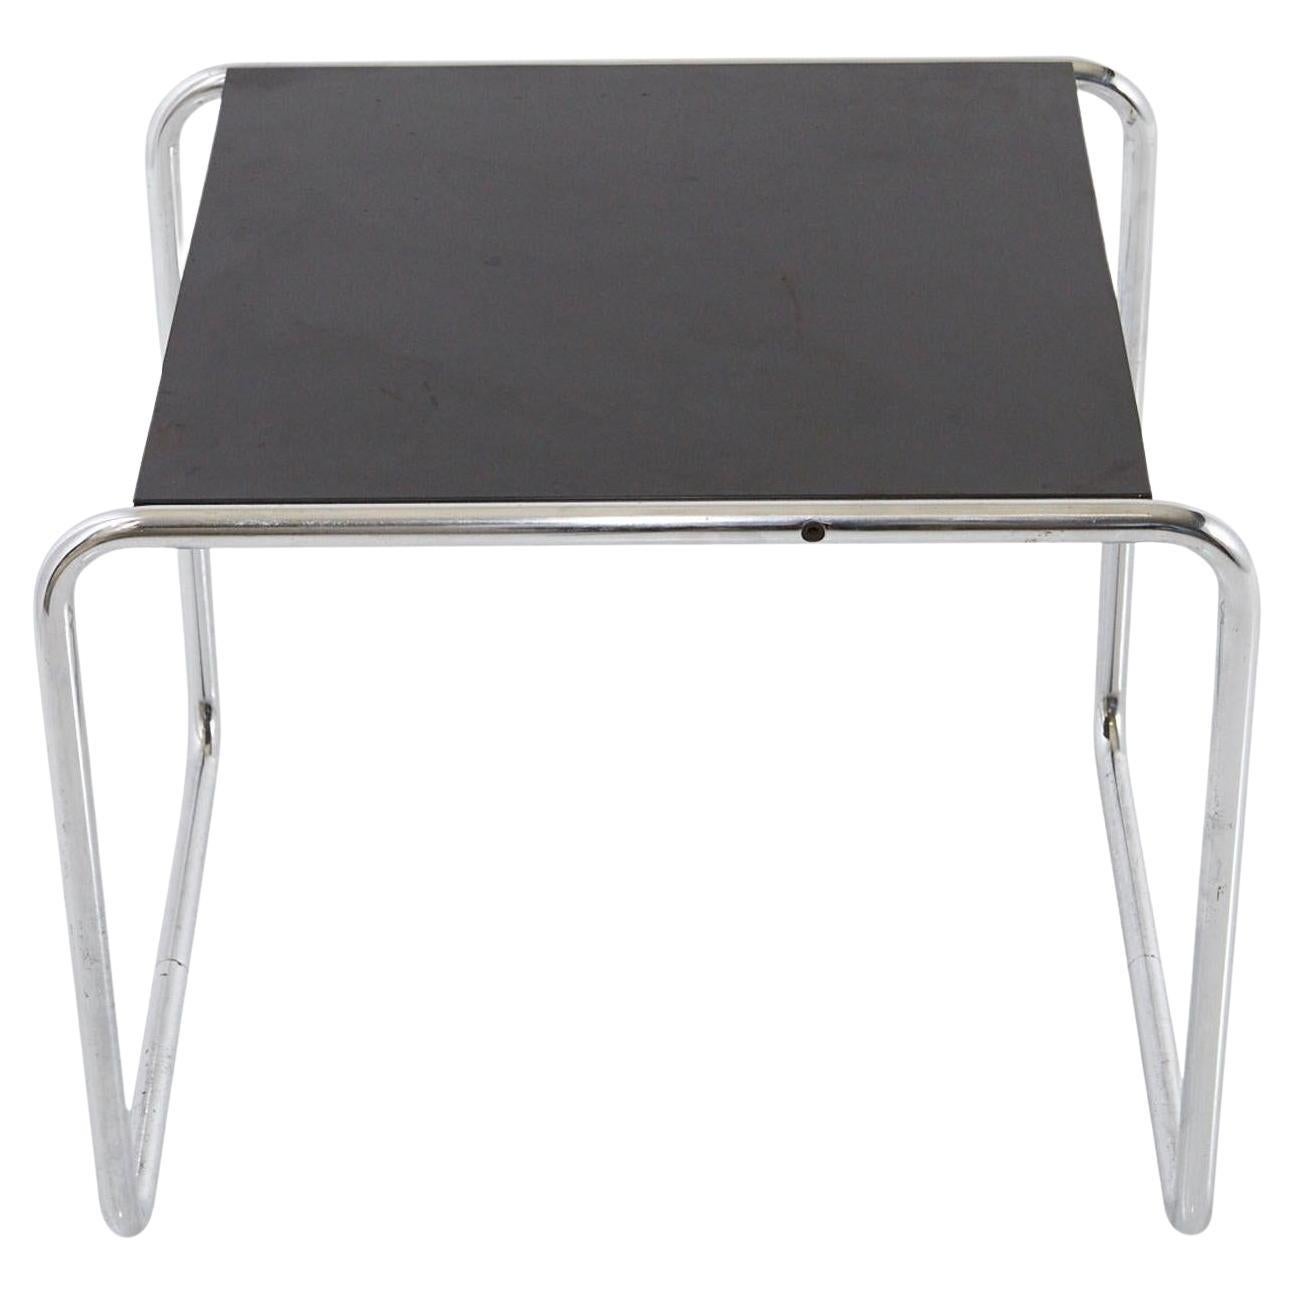 Marcel Breuer, Laccio Side Table Black Laminated Top with Tubular Chromed Base